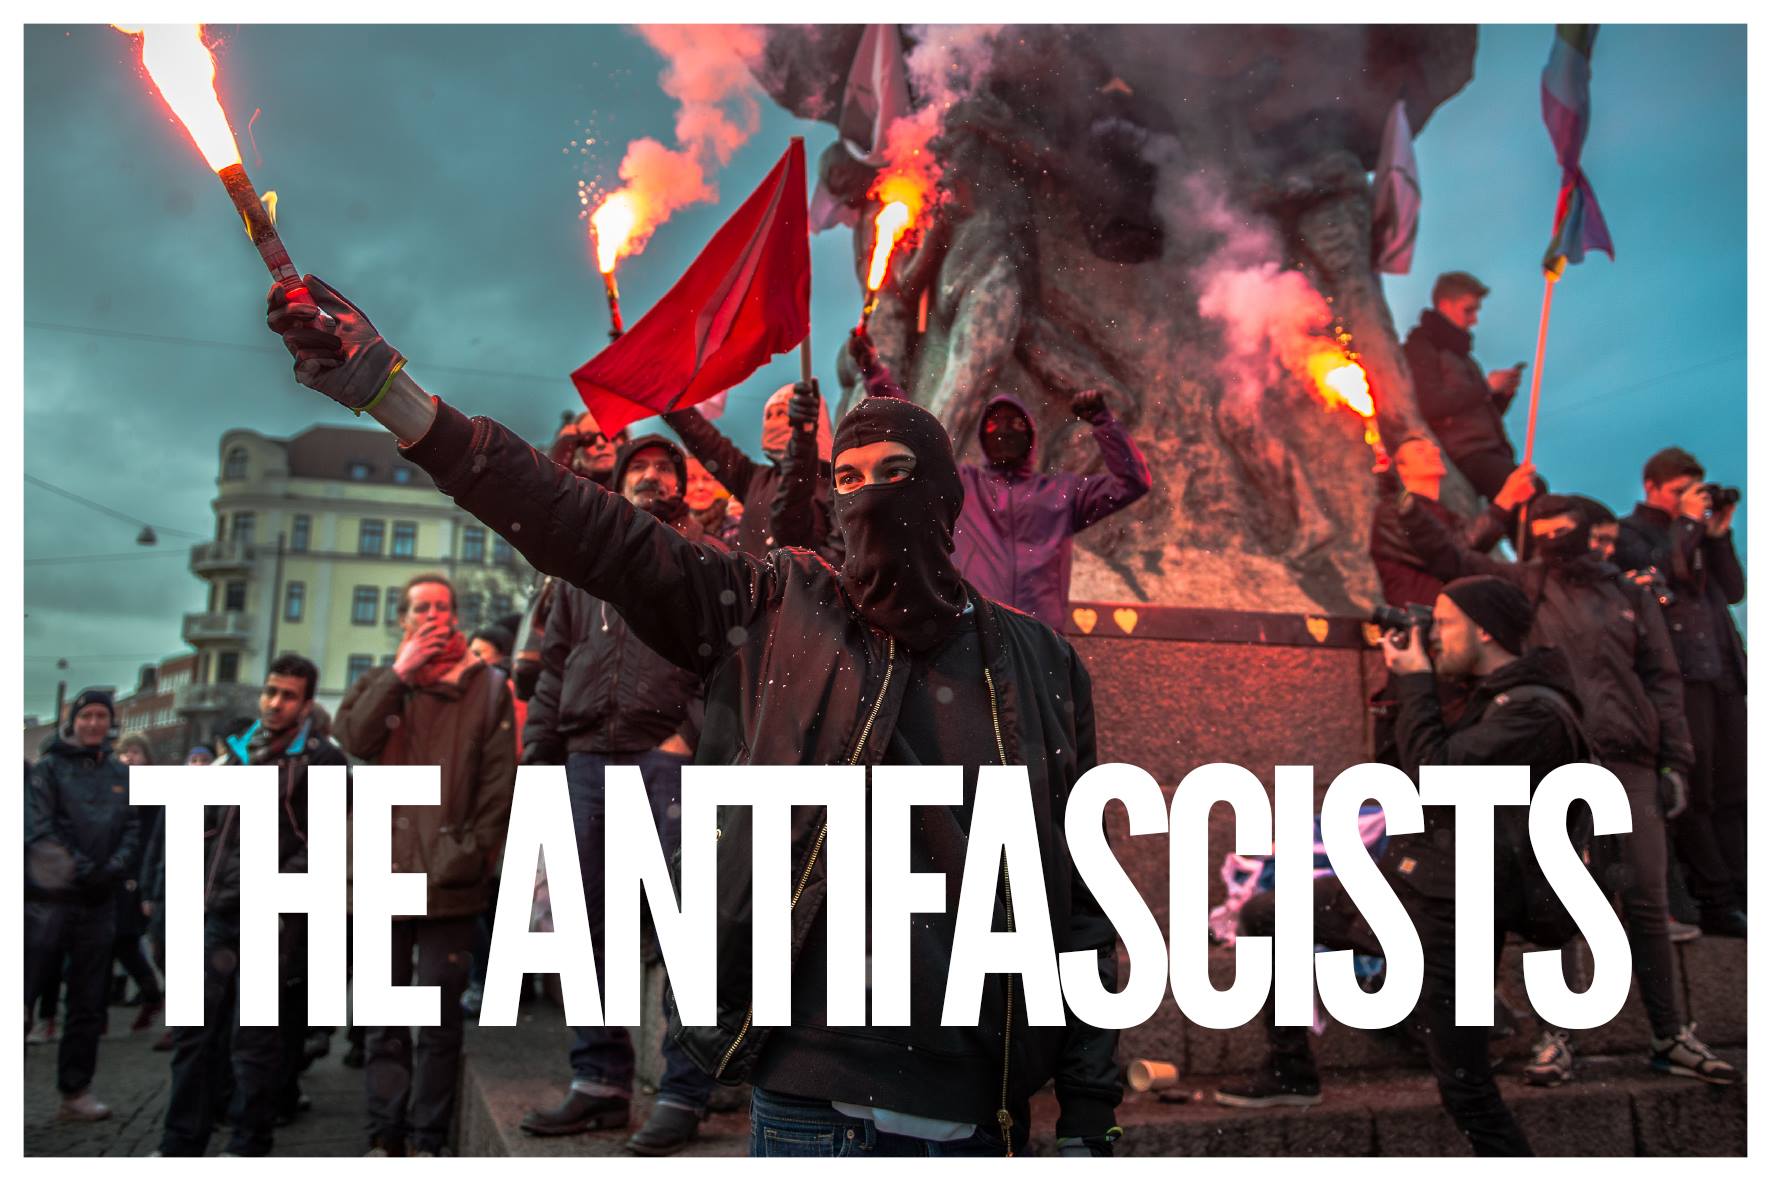 Documentario | “The Antifascists” (2017)